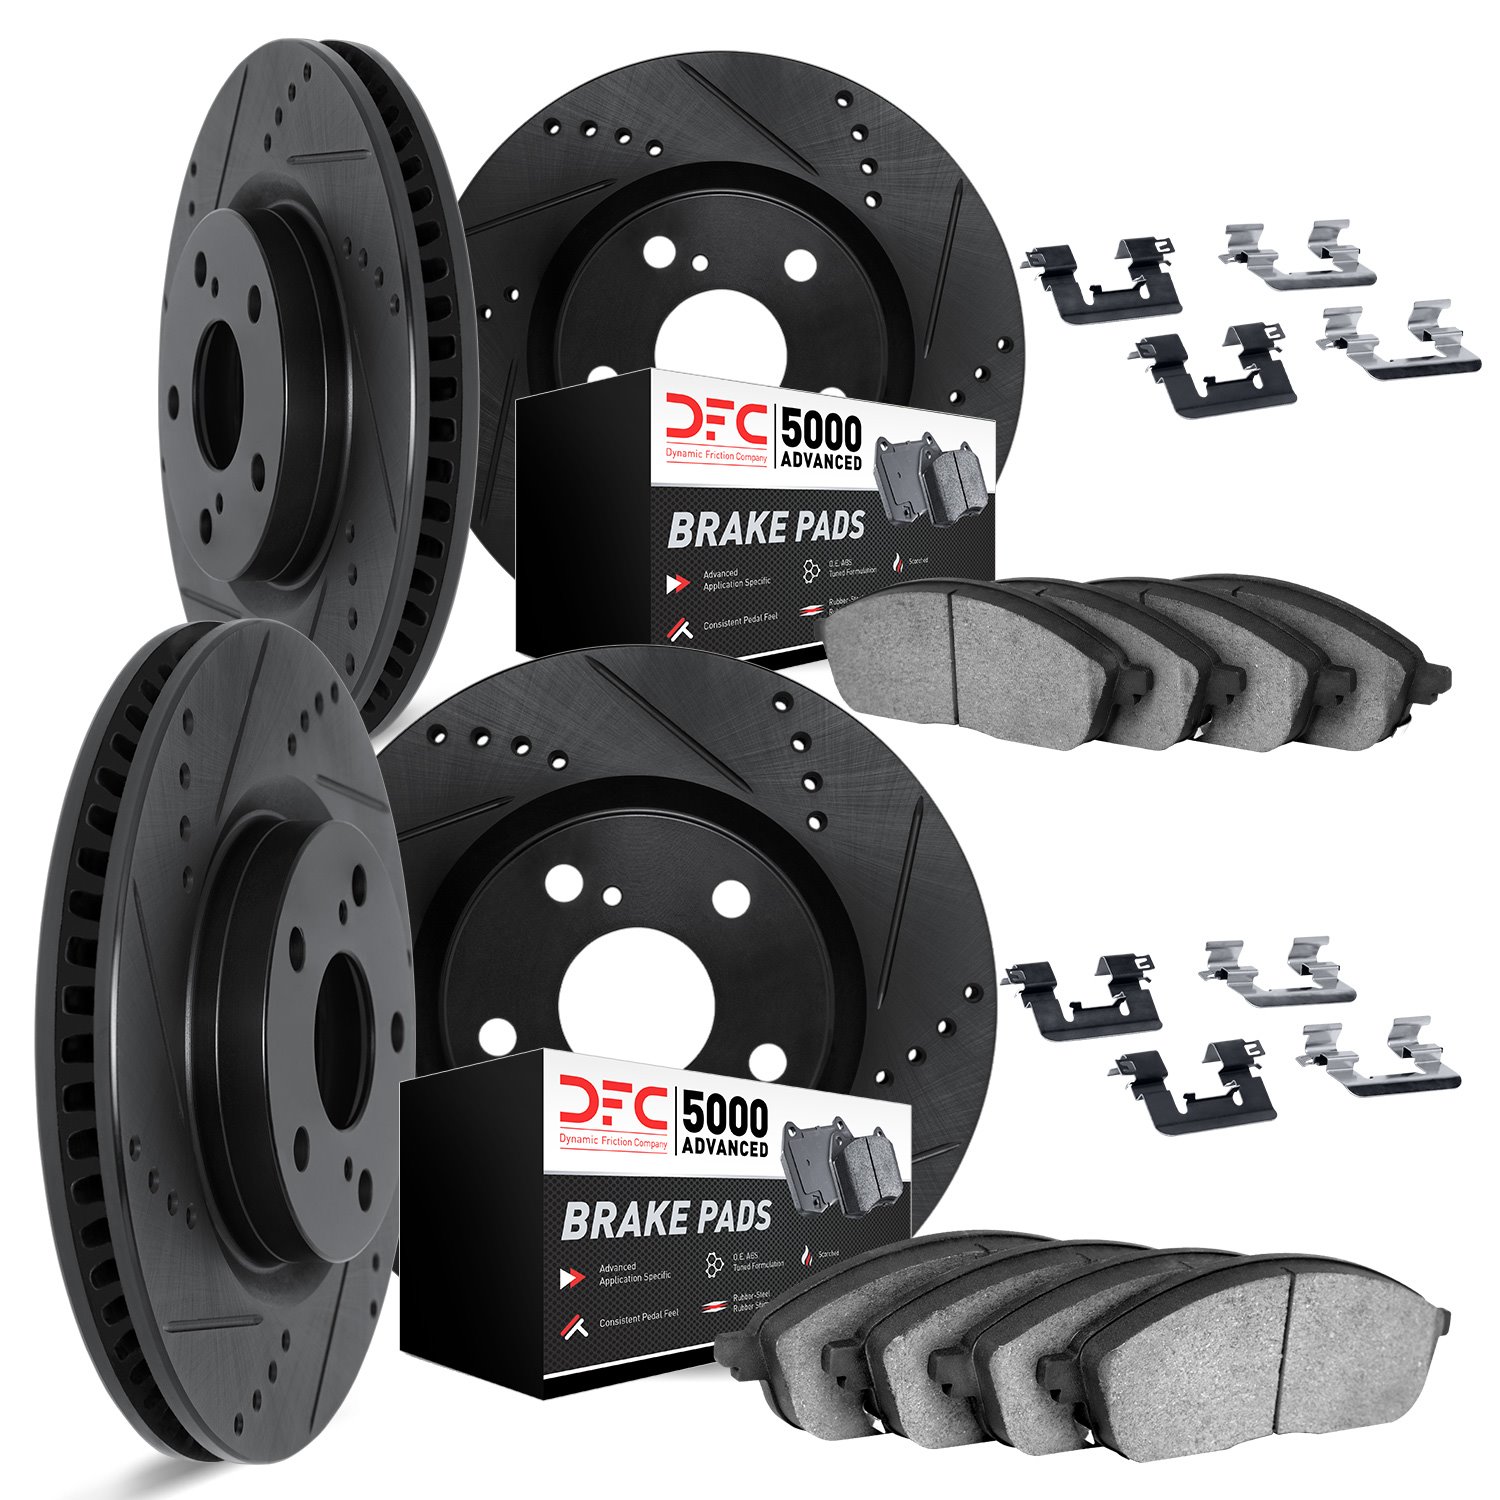 8514-42022 Drilled/Slotted Brake Rotors w/5000 Advanced Brake Pads Kit & Hardware [Black], Fits Select Mopar, Position: Front an